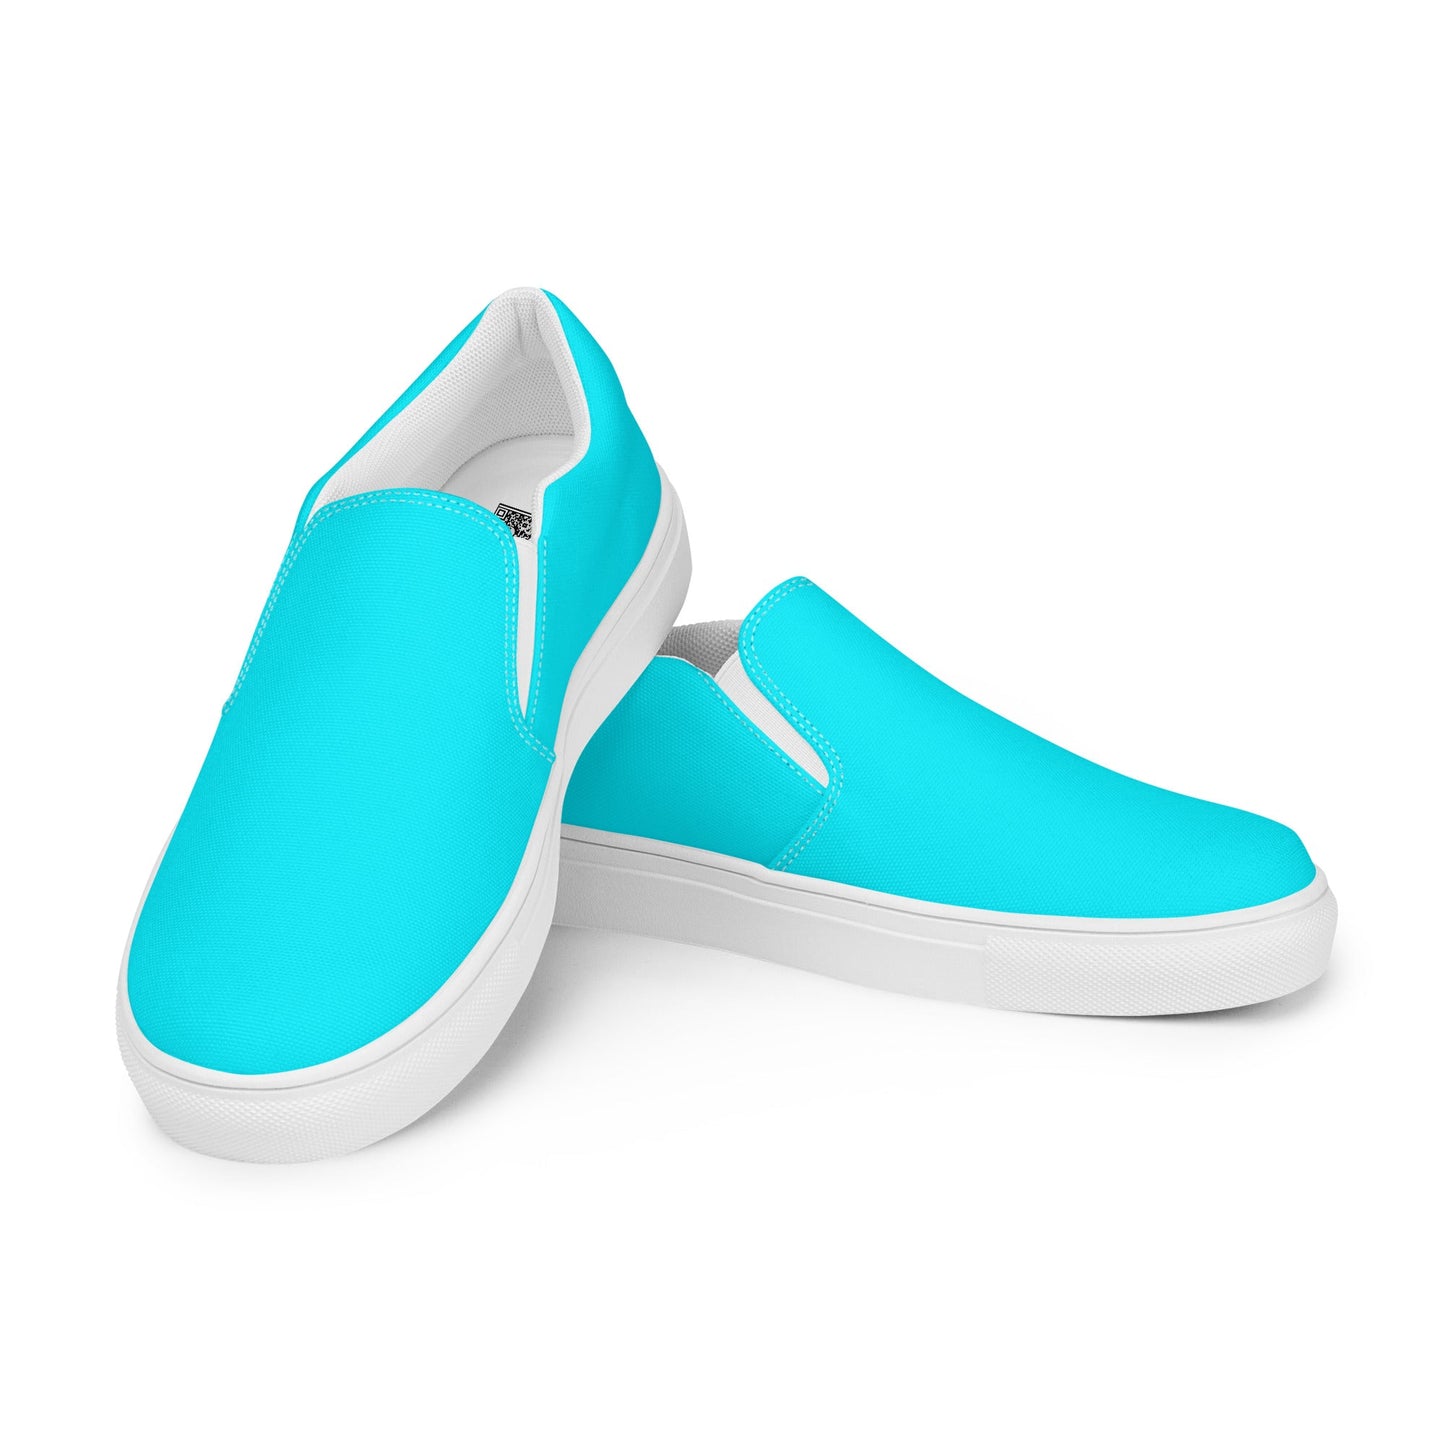 klasneakers Women’s slip-on canvas shoes - Cool Pool Aqua Blue